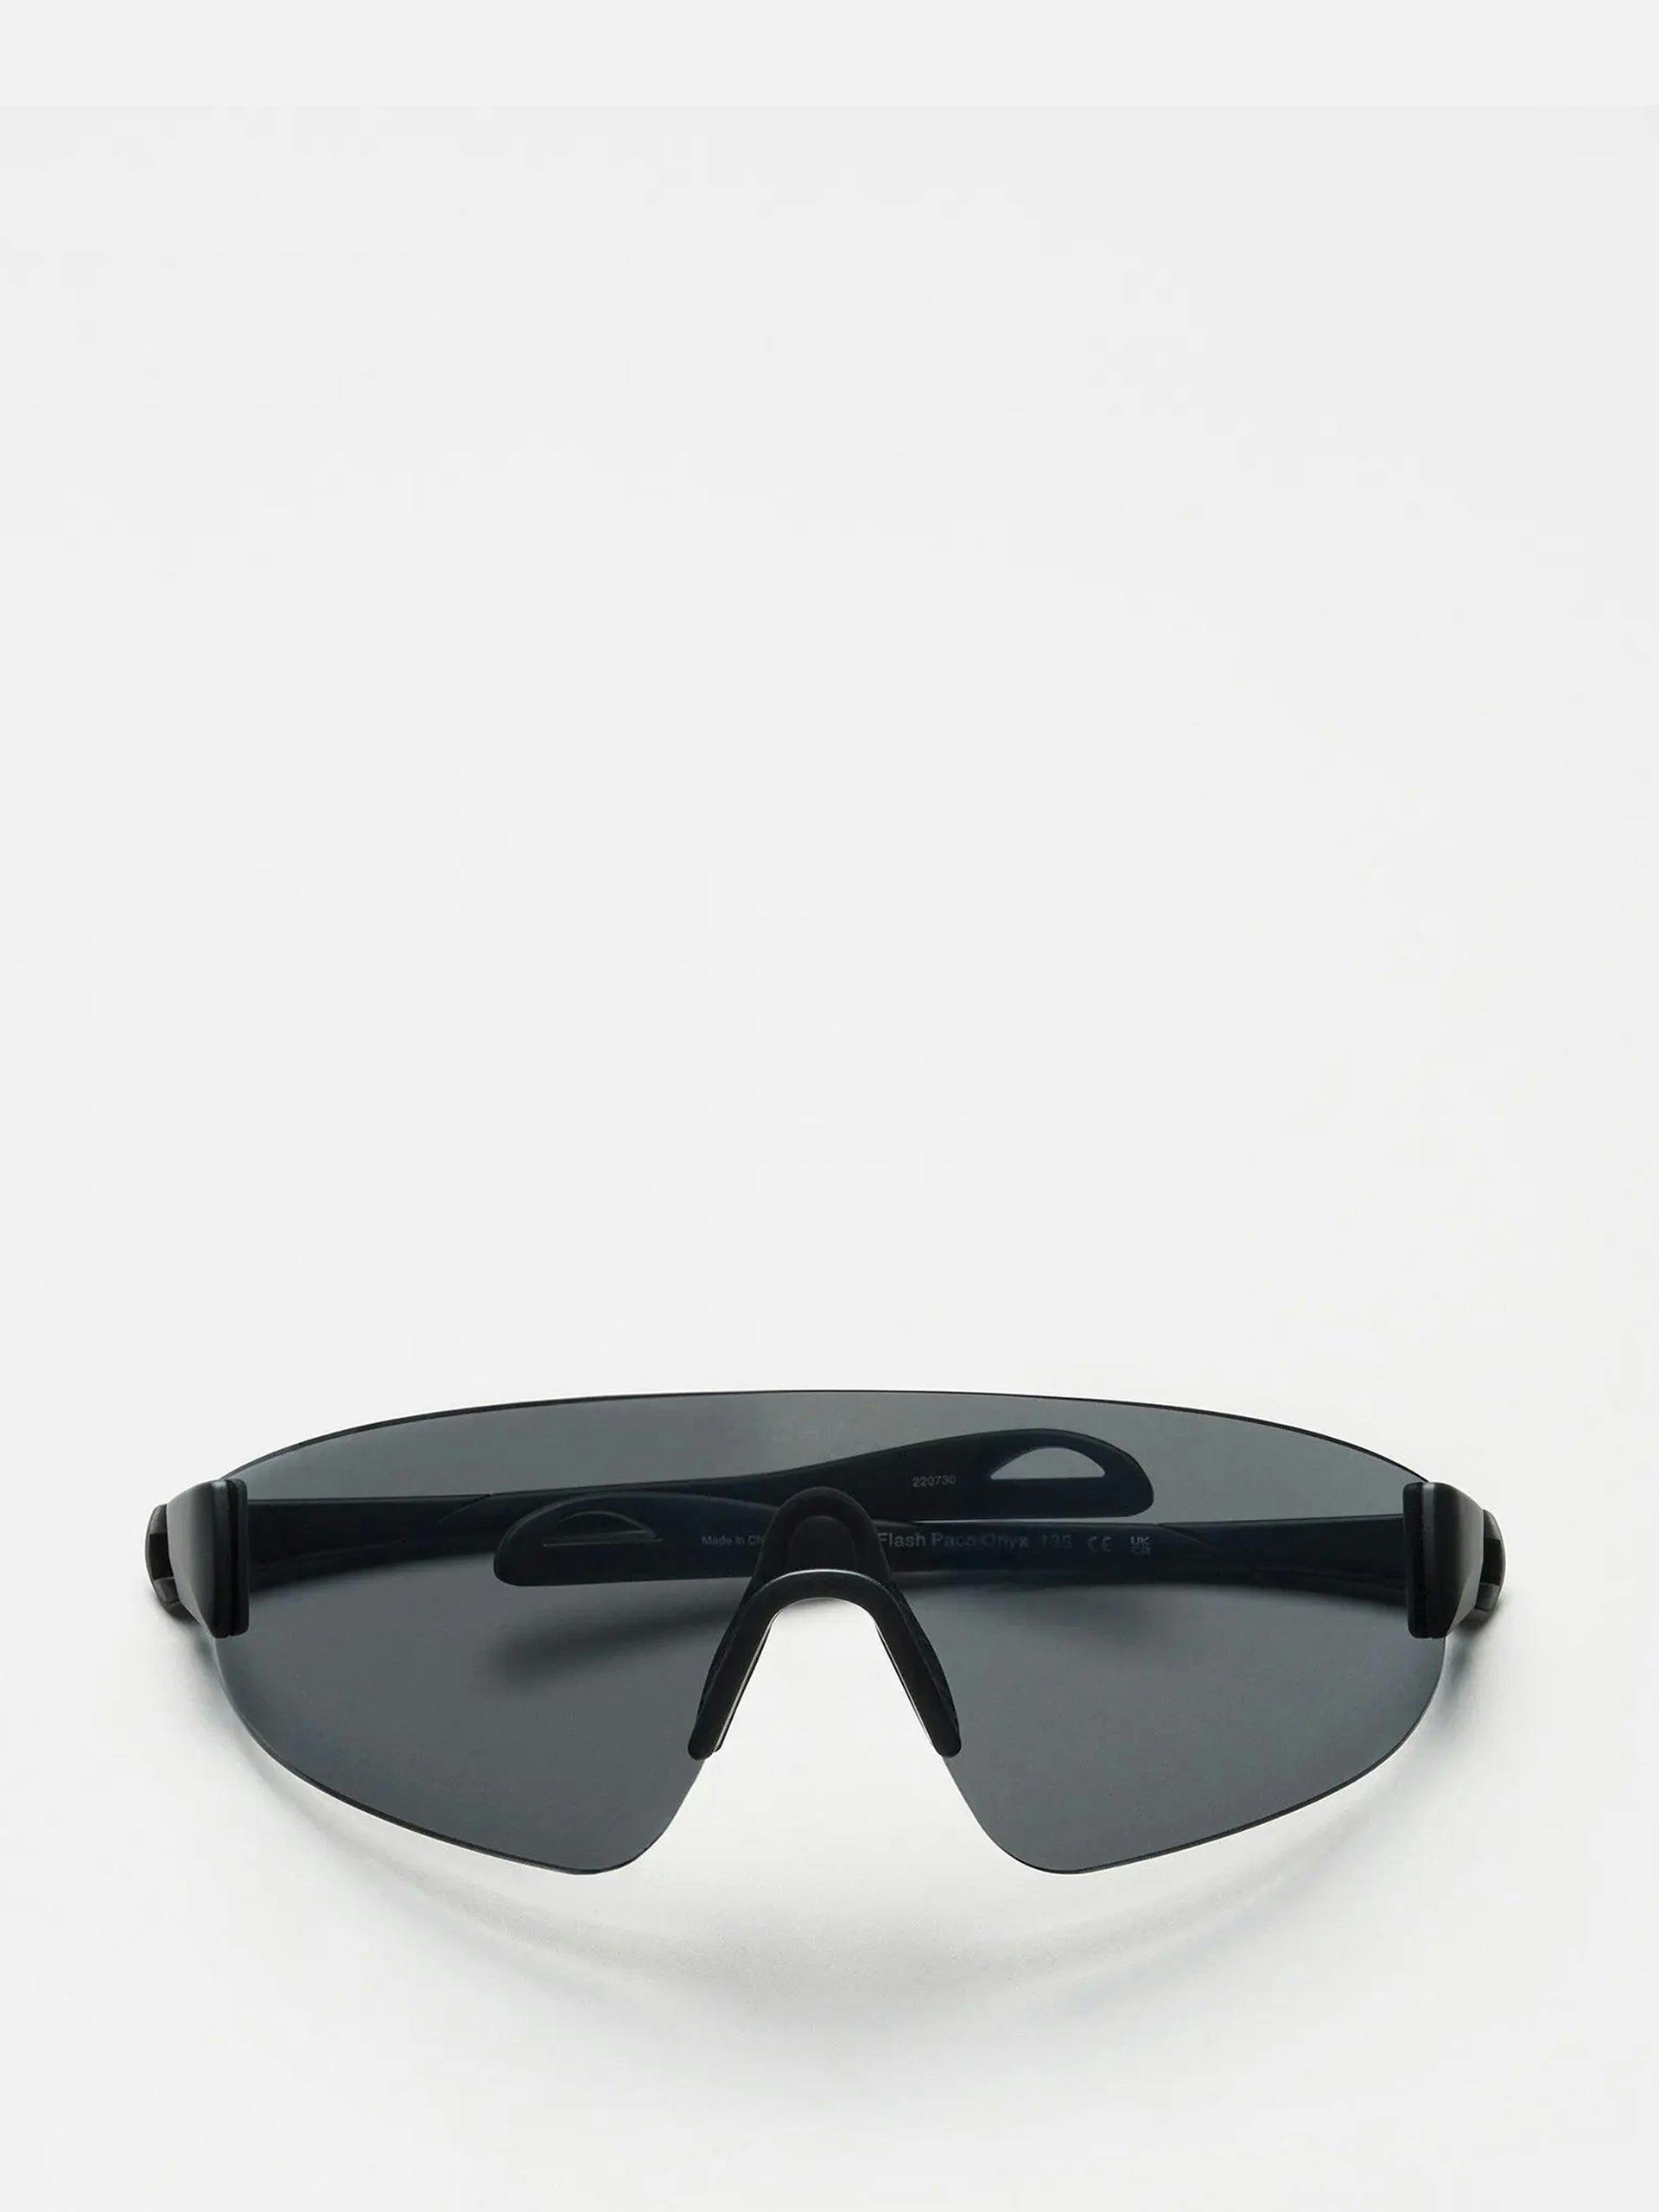 Pace onyx sunglasses